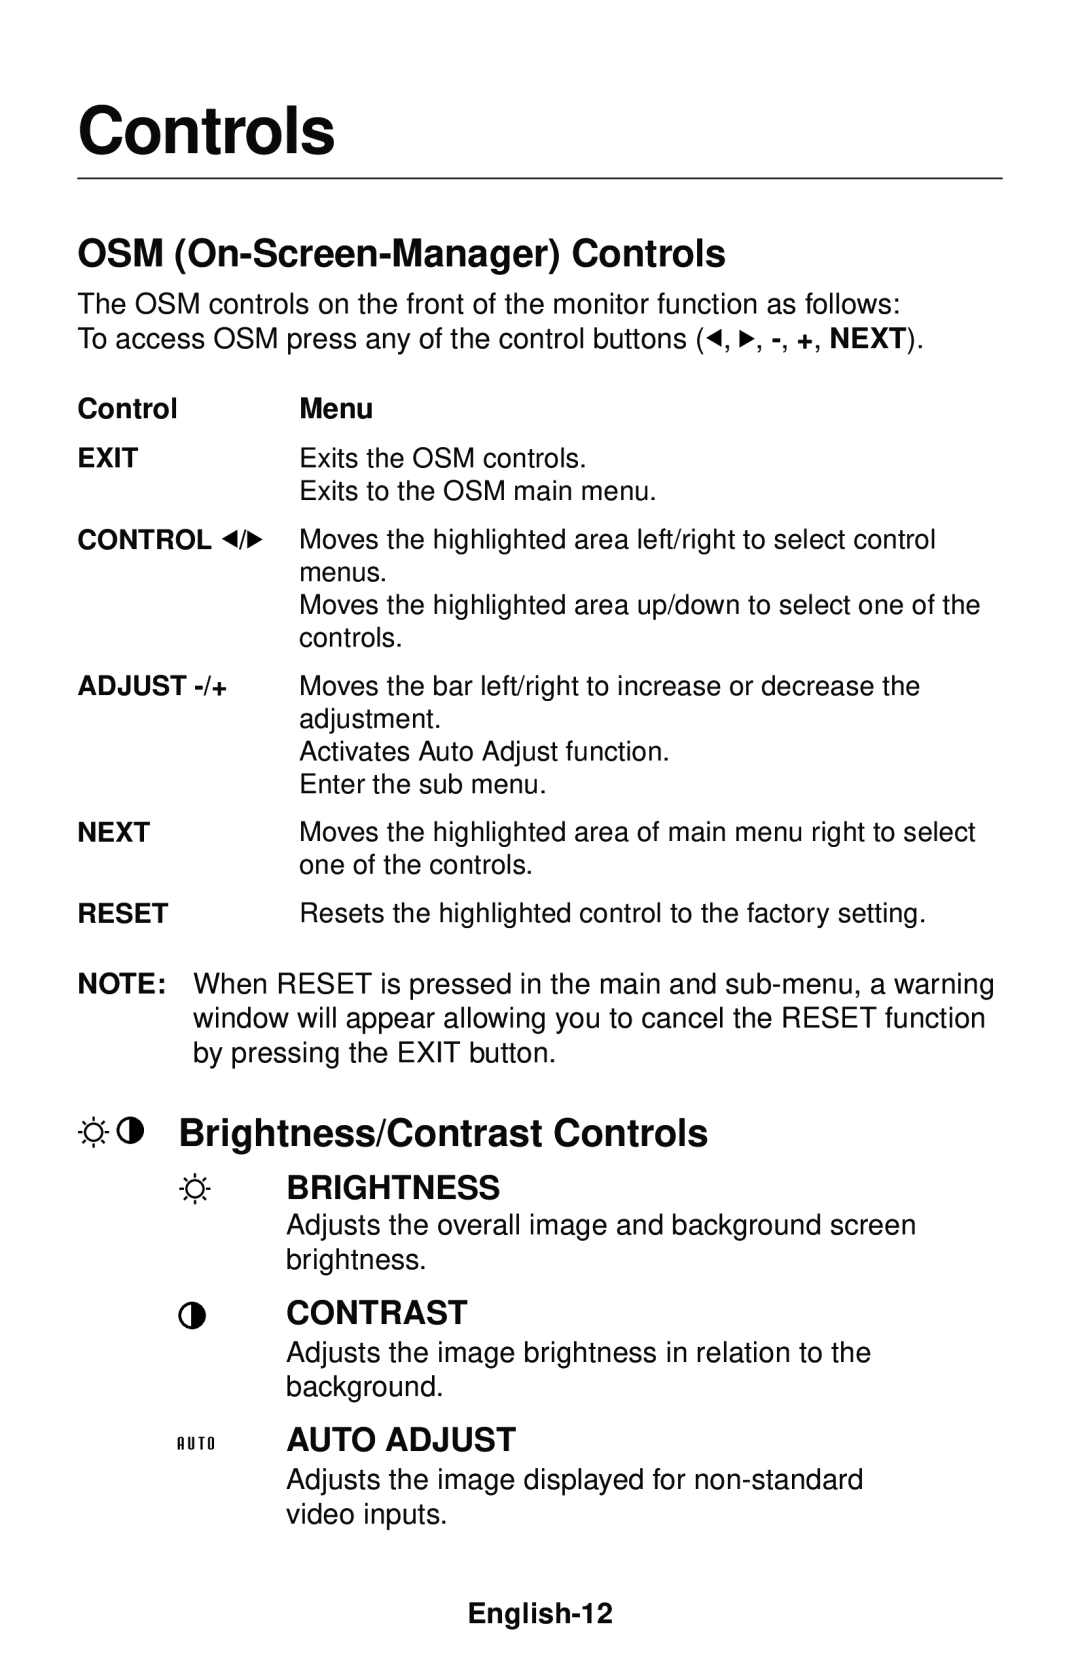 NEC LCD1550V user manual OSM On-Screen-Manager Controls, Brightness/Contrast Controls, Auto Adjust, Menu, English-12 